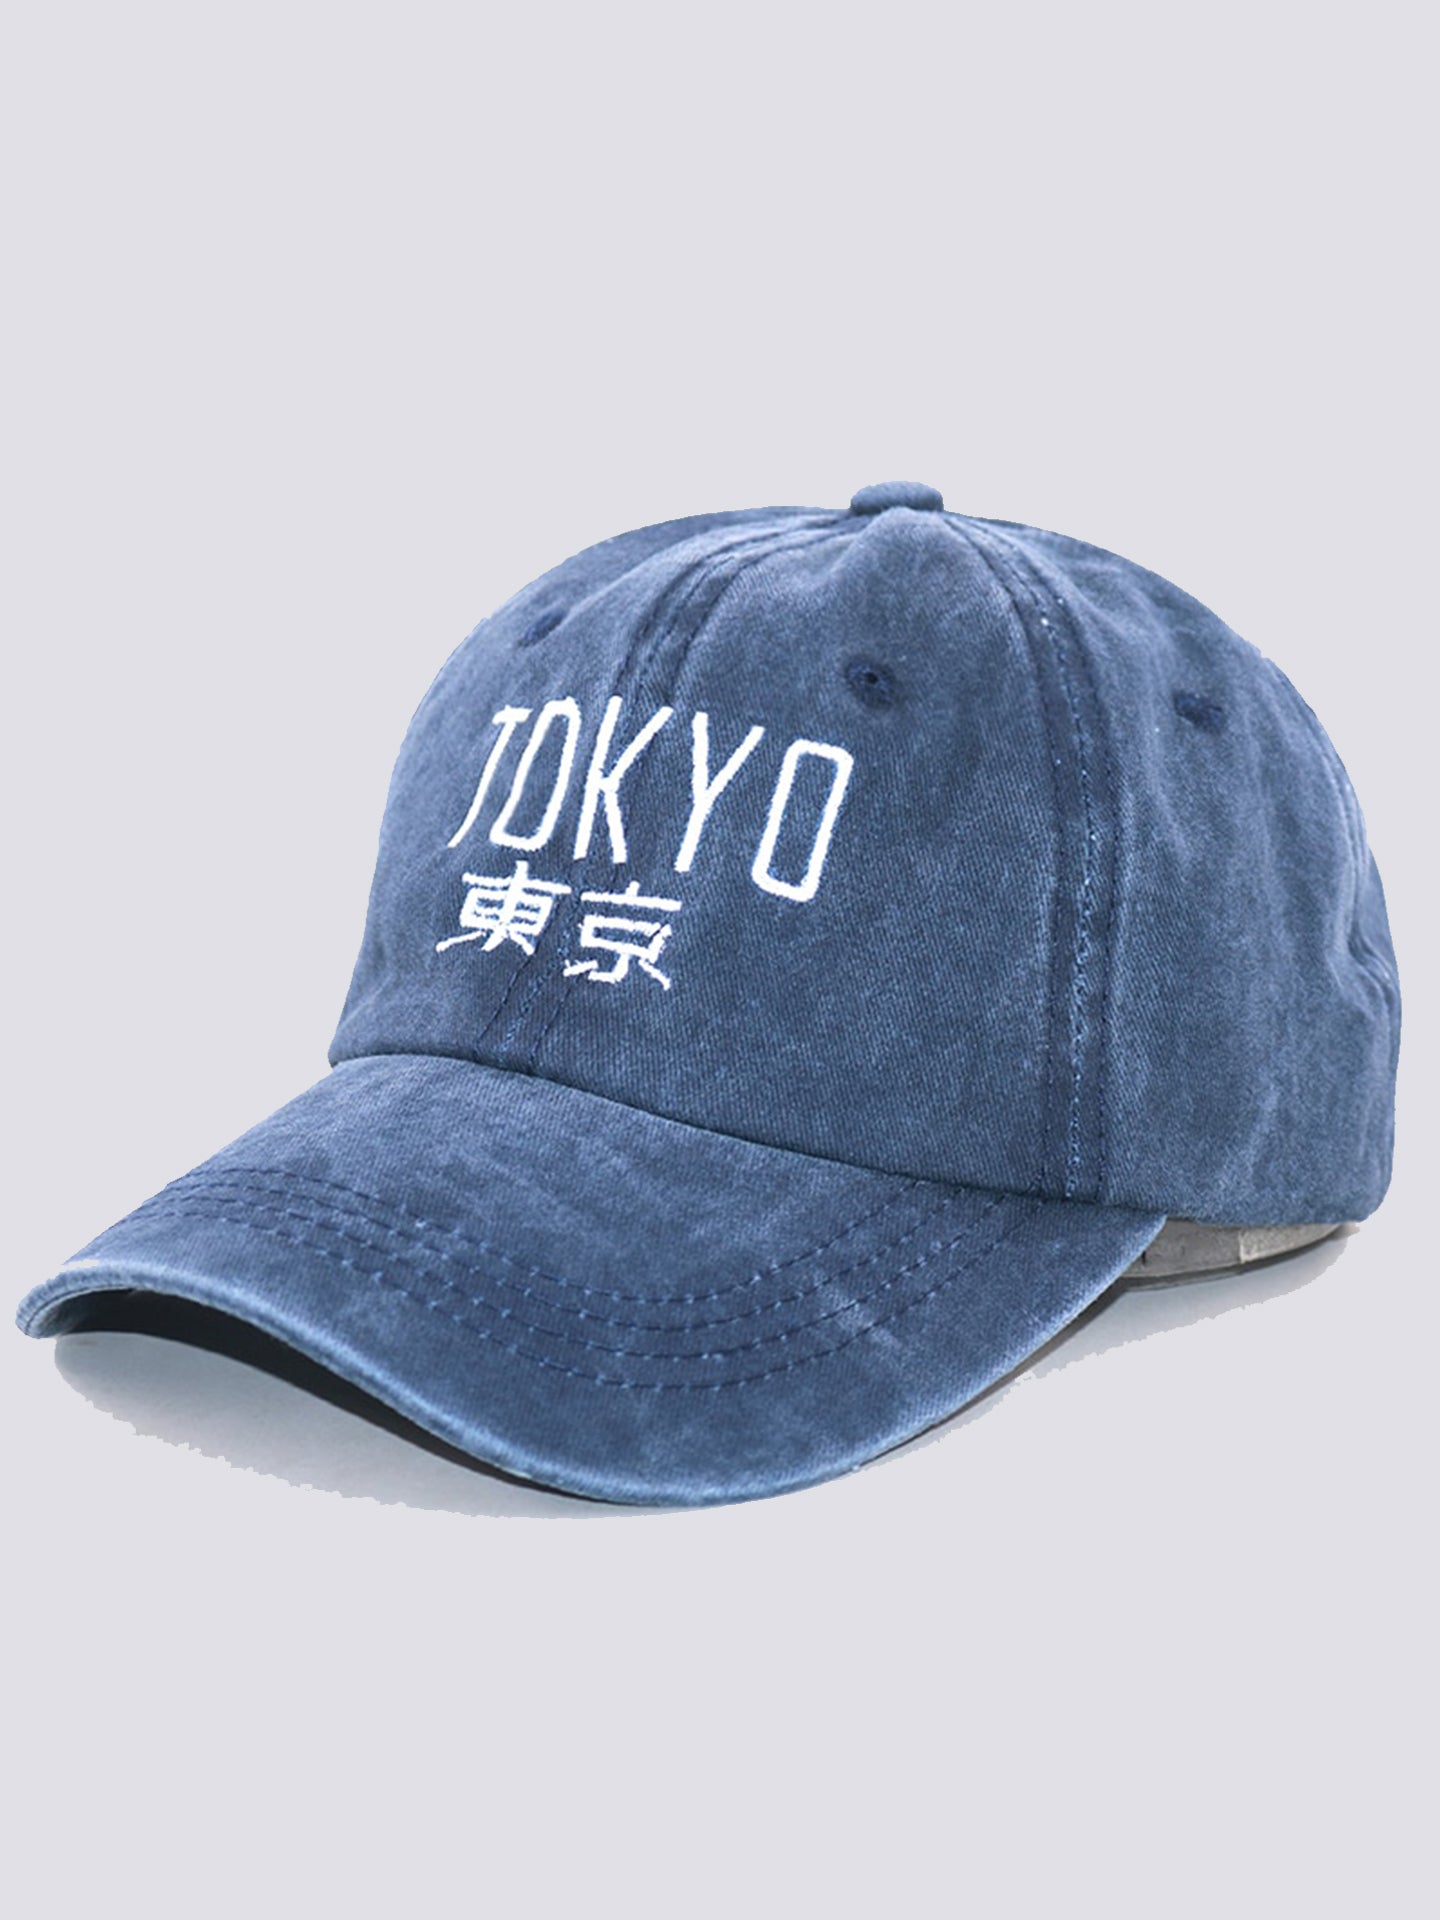 Tokyo Vintage Cap - Blue